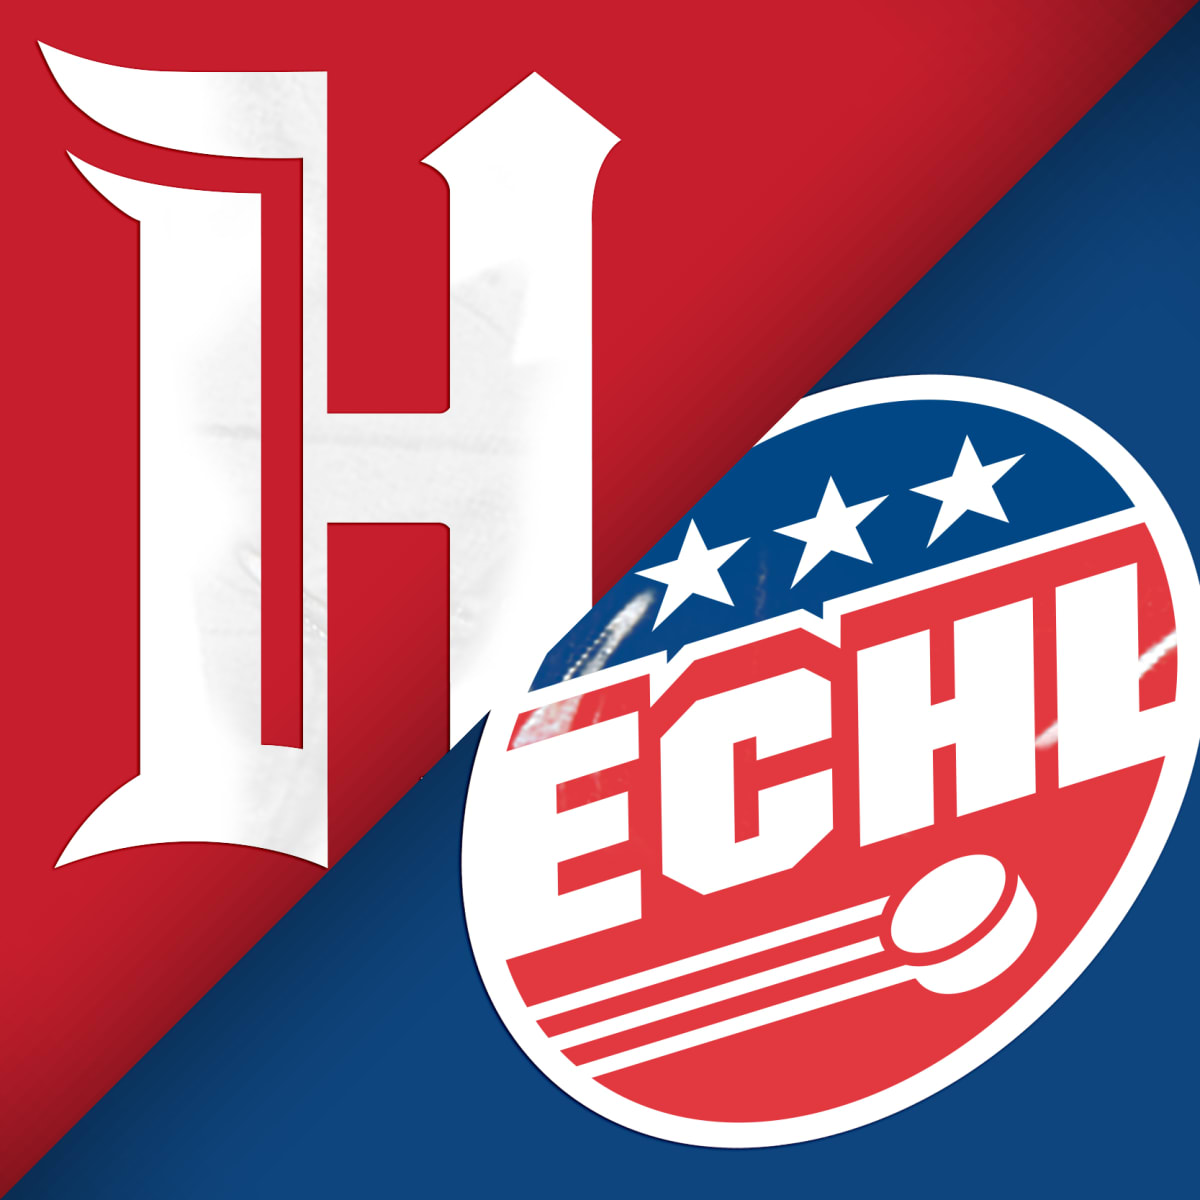 ECHL Announces 2021 Warrior/ECHL All-Star Jersey Contest